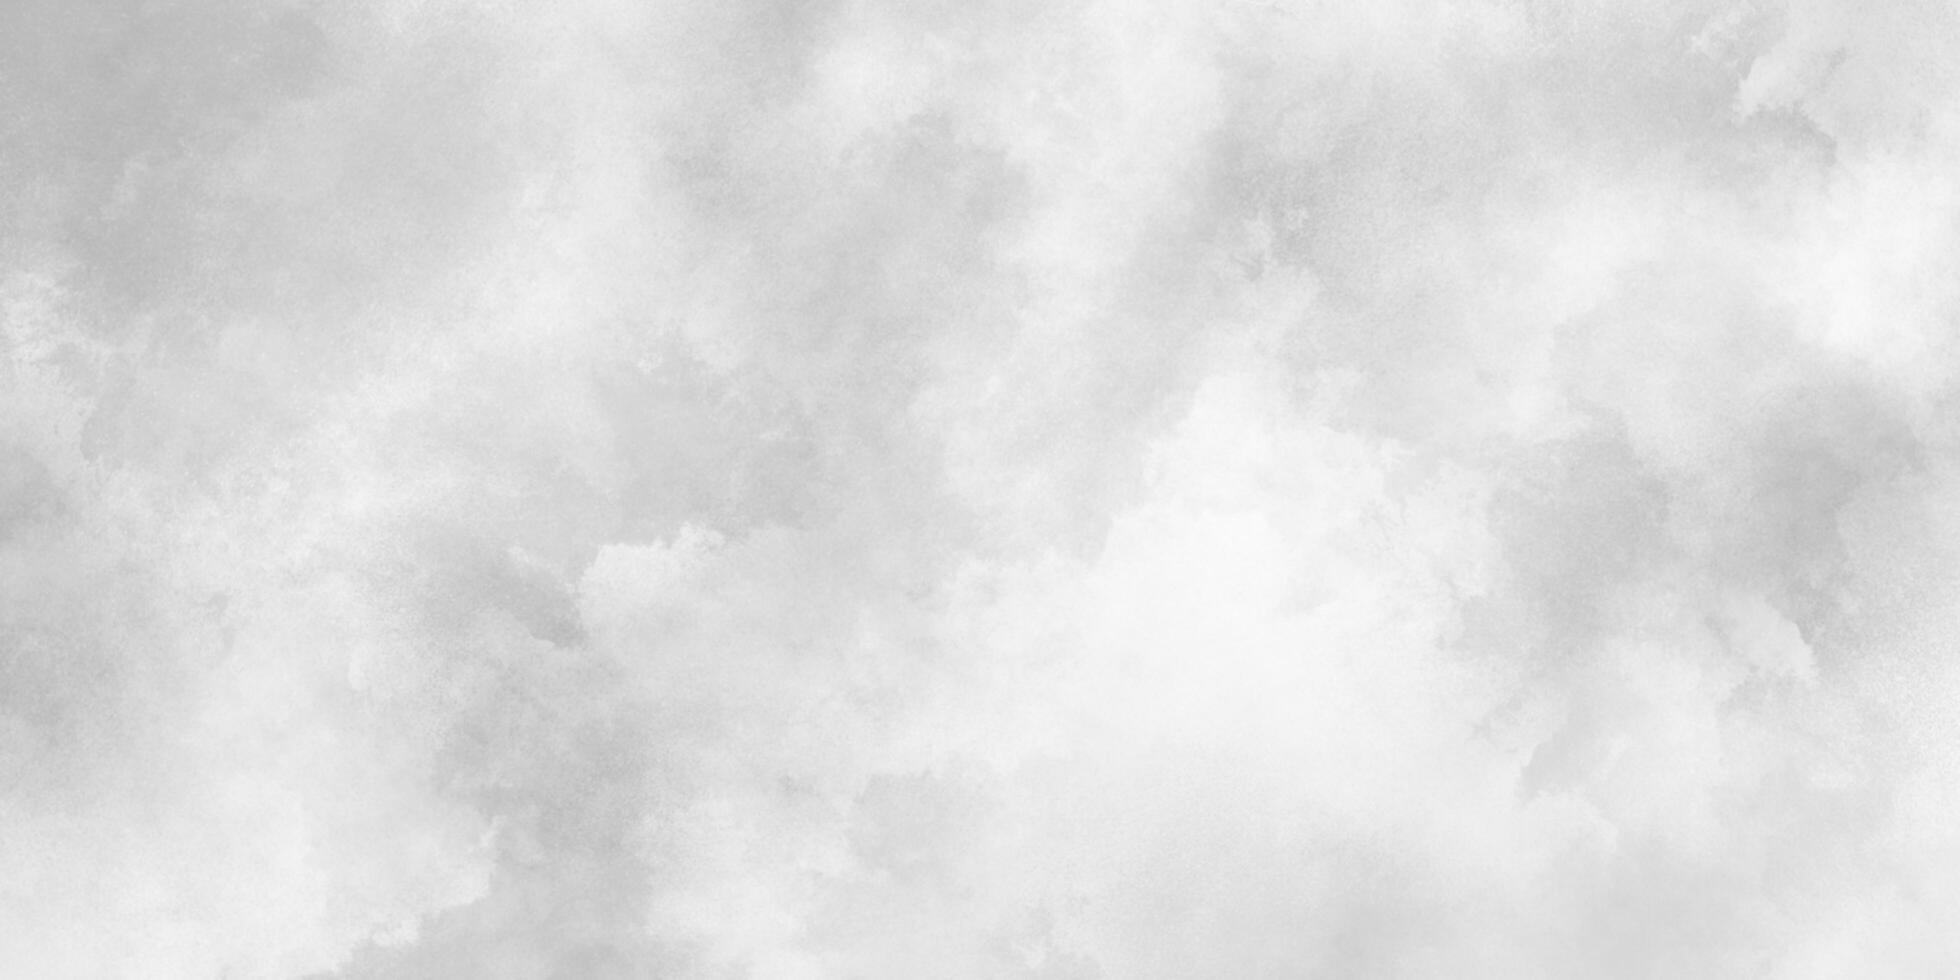 grunge wolken of smog structuur met vlekken, wit bewolkt lucht of cloudscape of mistig, zwart en wit helling waterverf achtergrond. foto